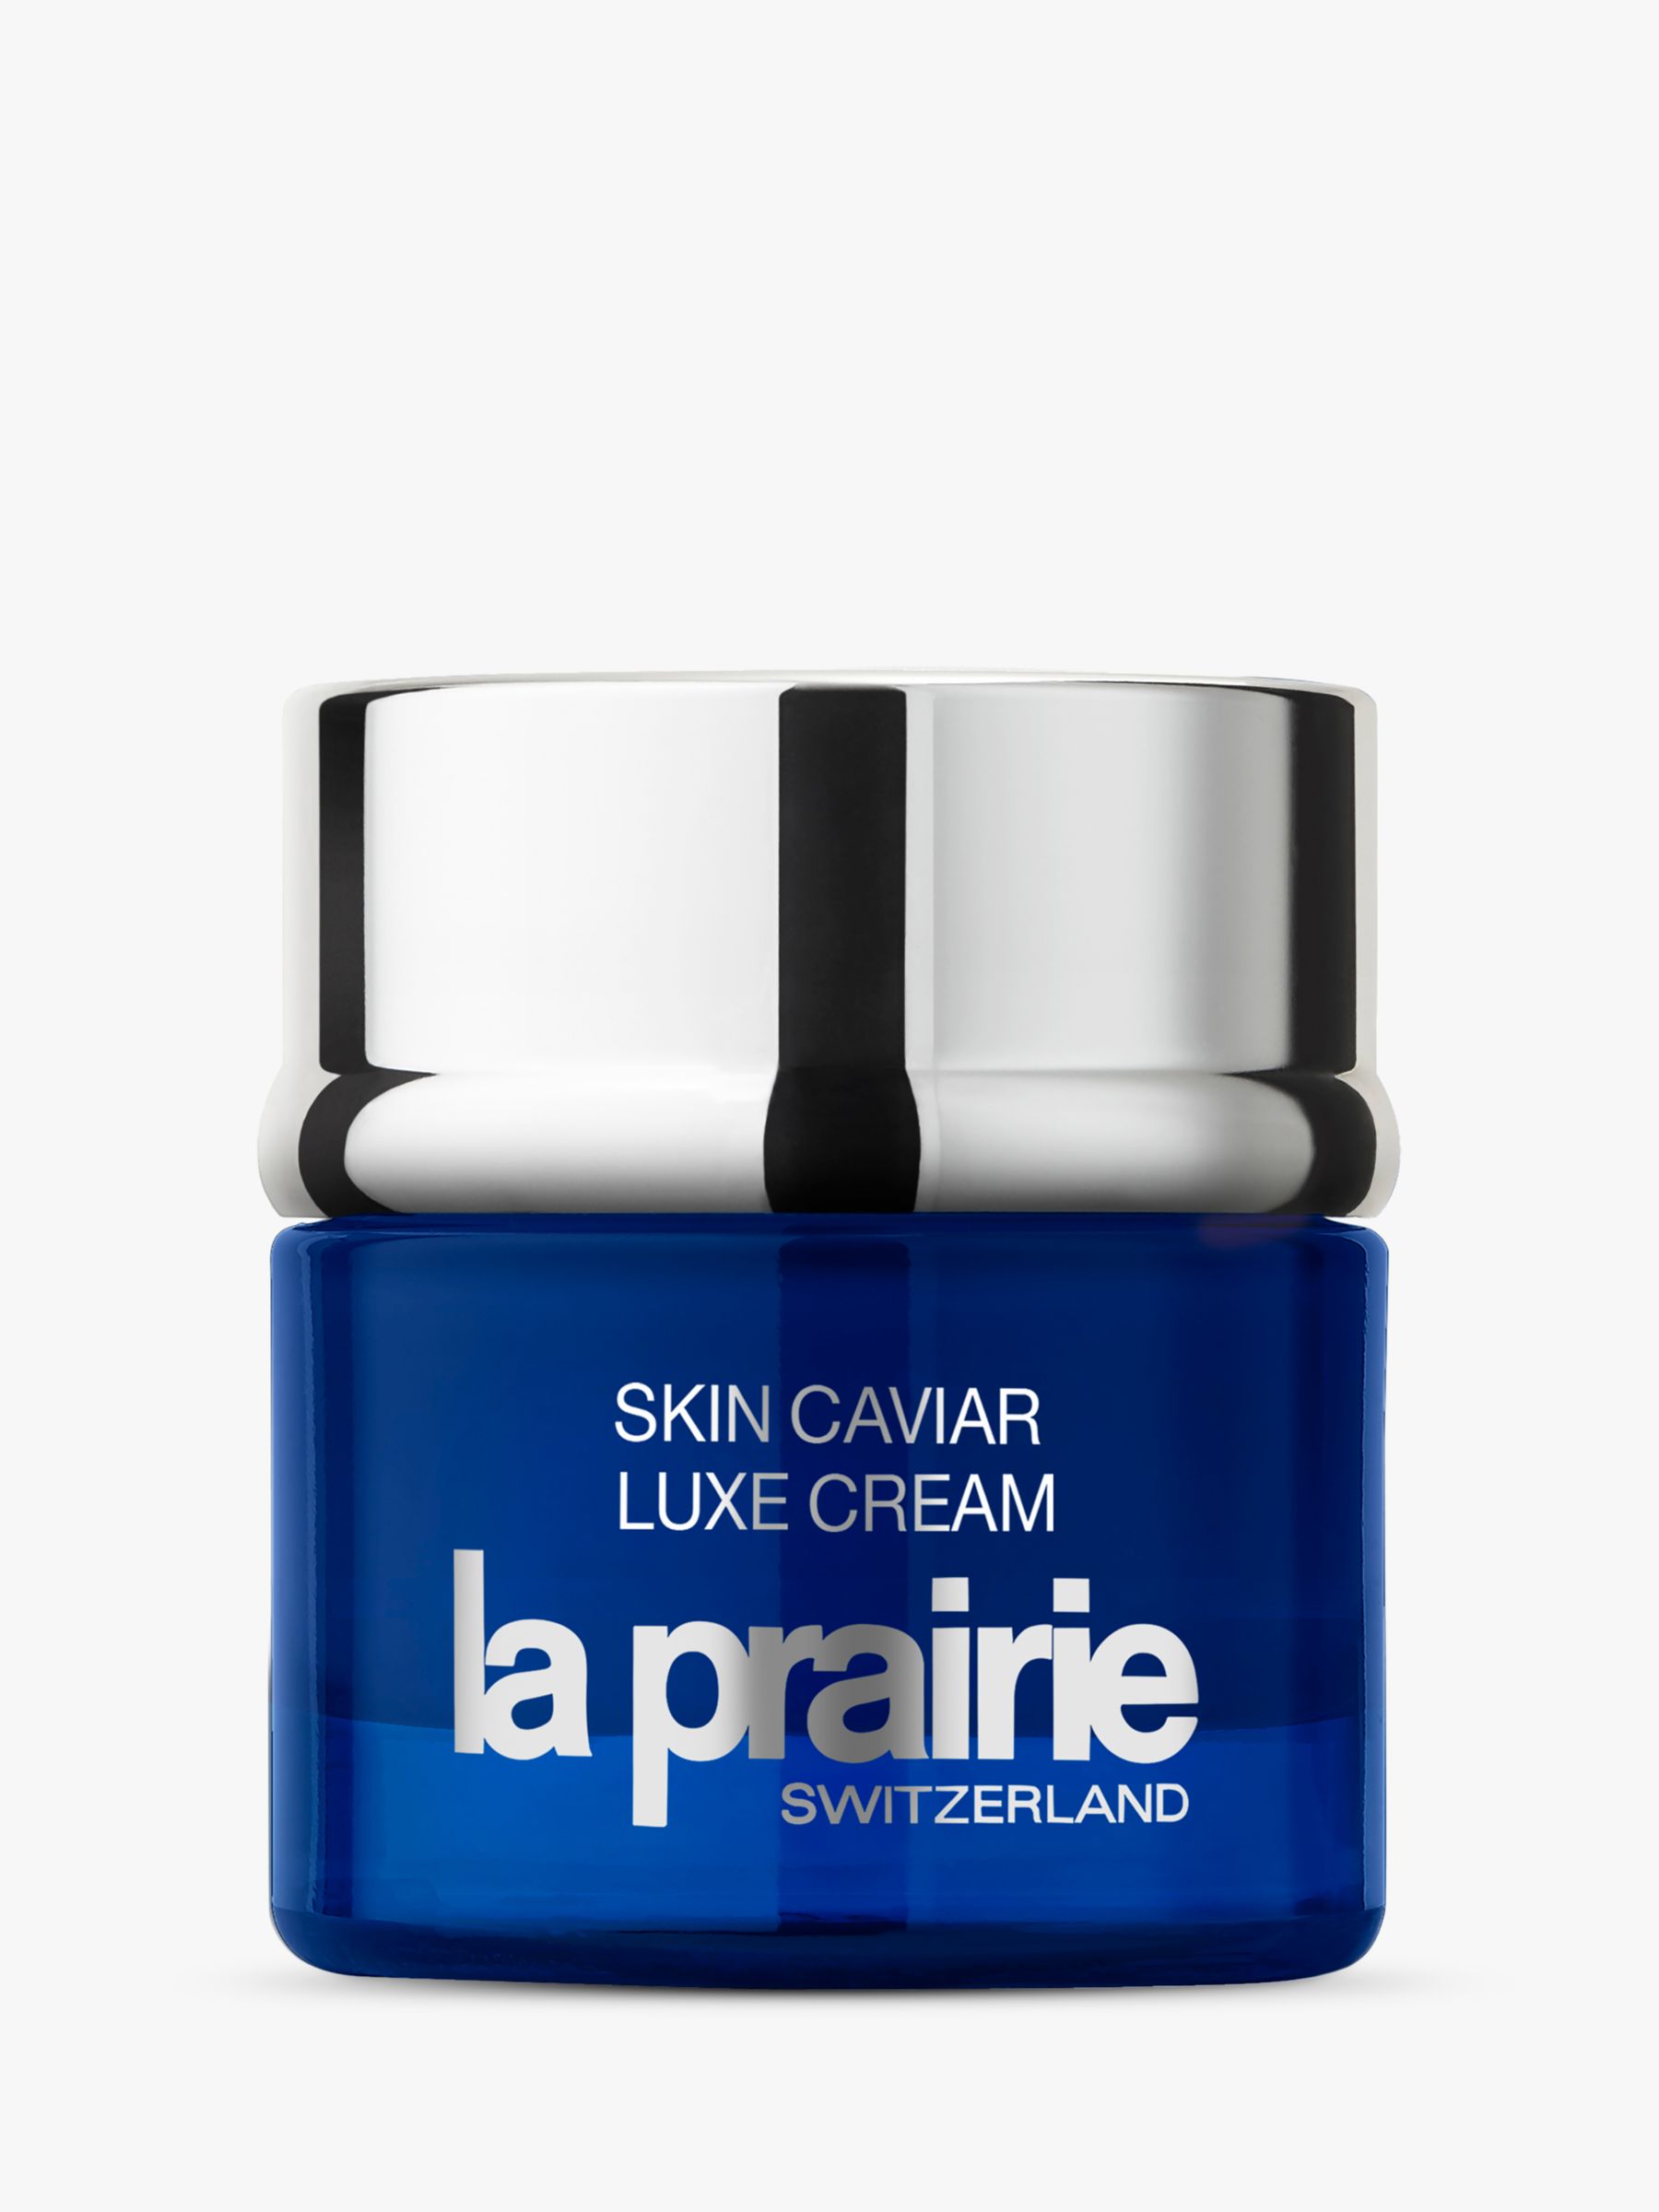 La Prairie Skin Caviar Luxe Cream, 100ml